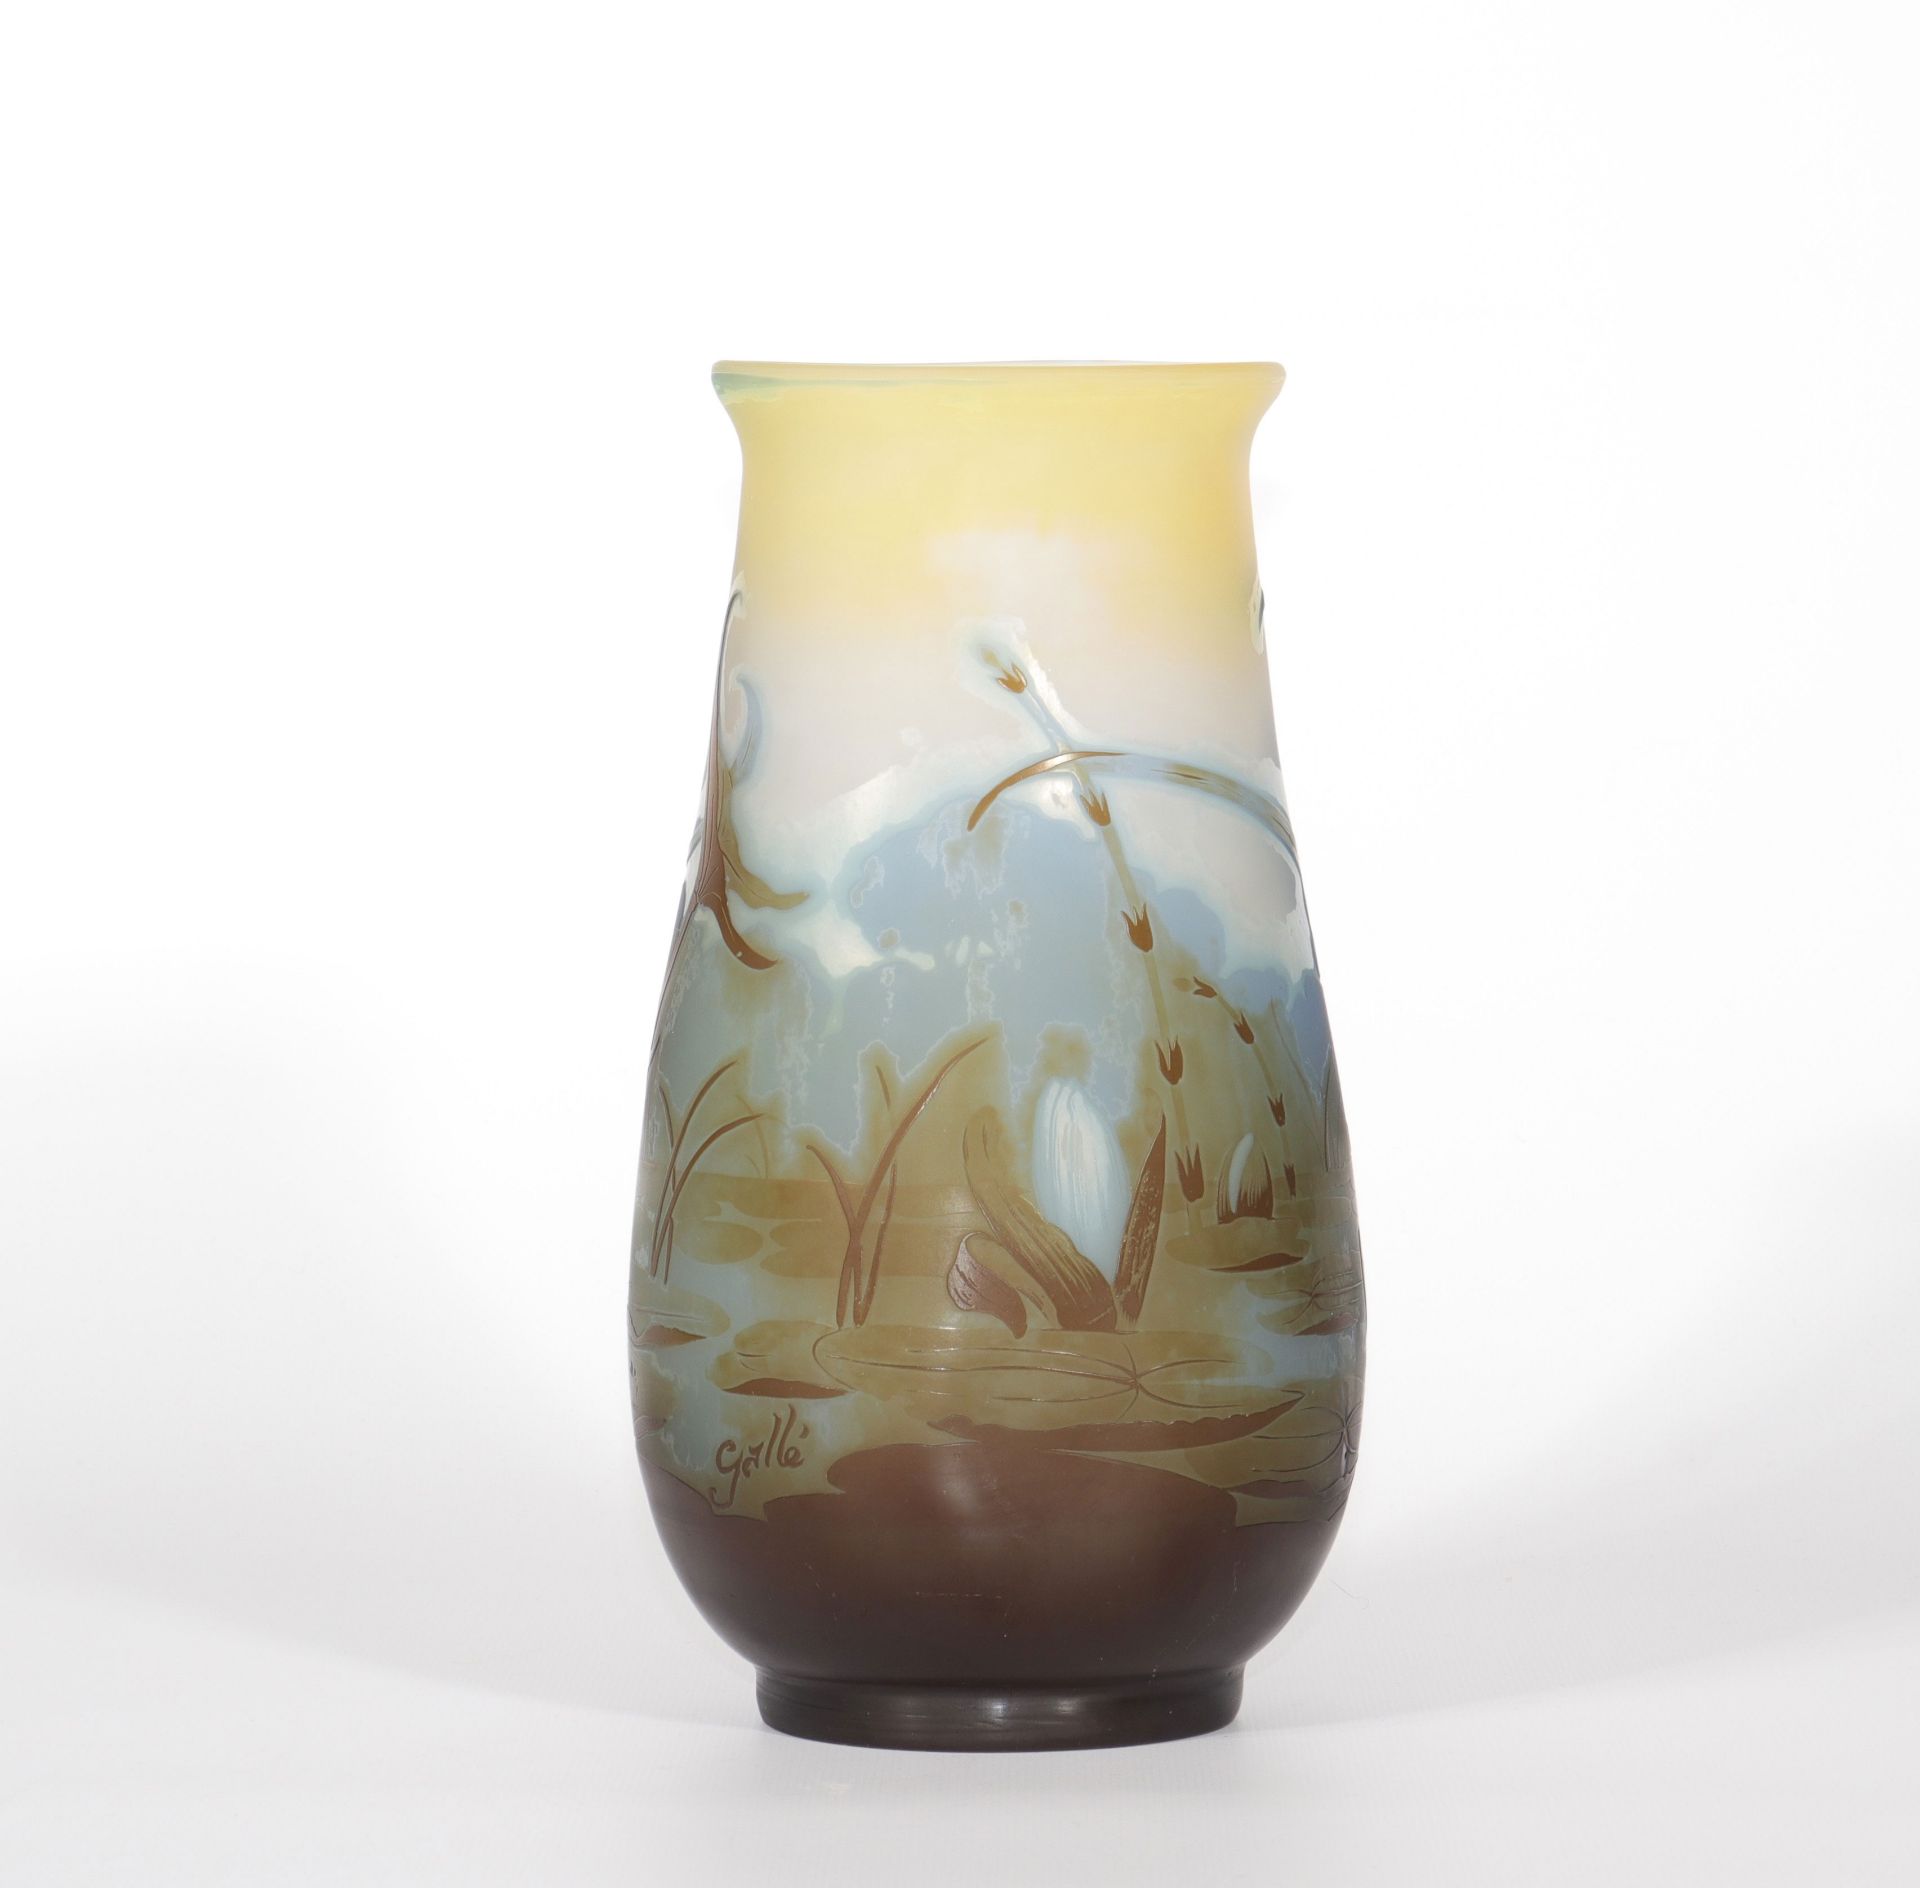 Emile Galle vase with aquatic decoration - Image 4 of 5